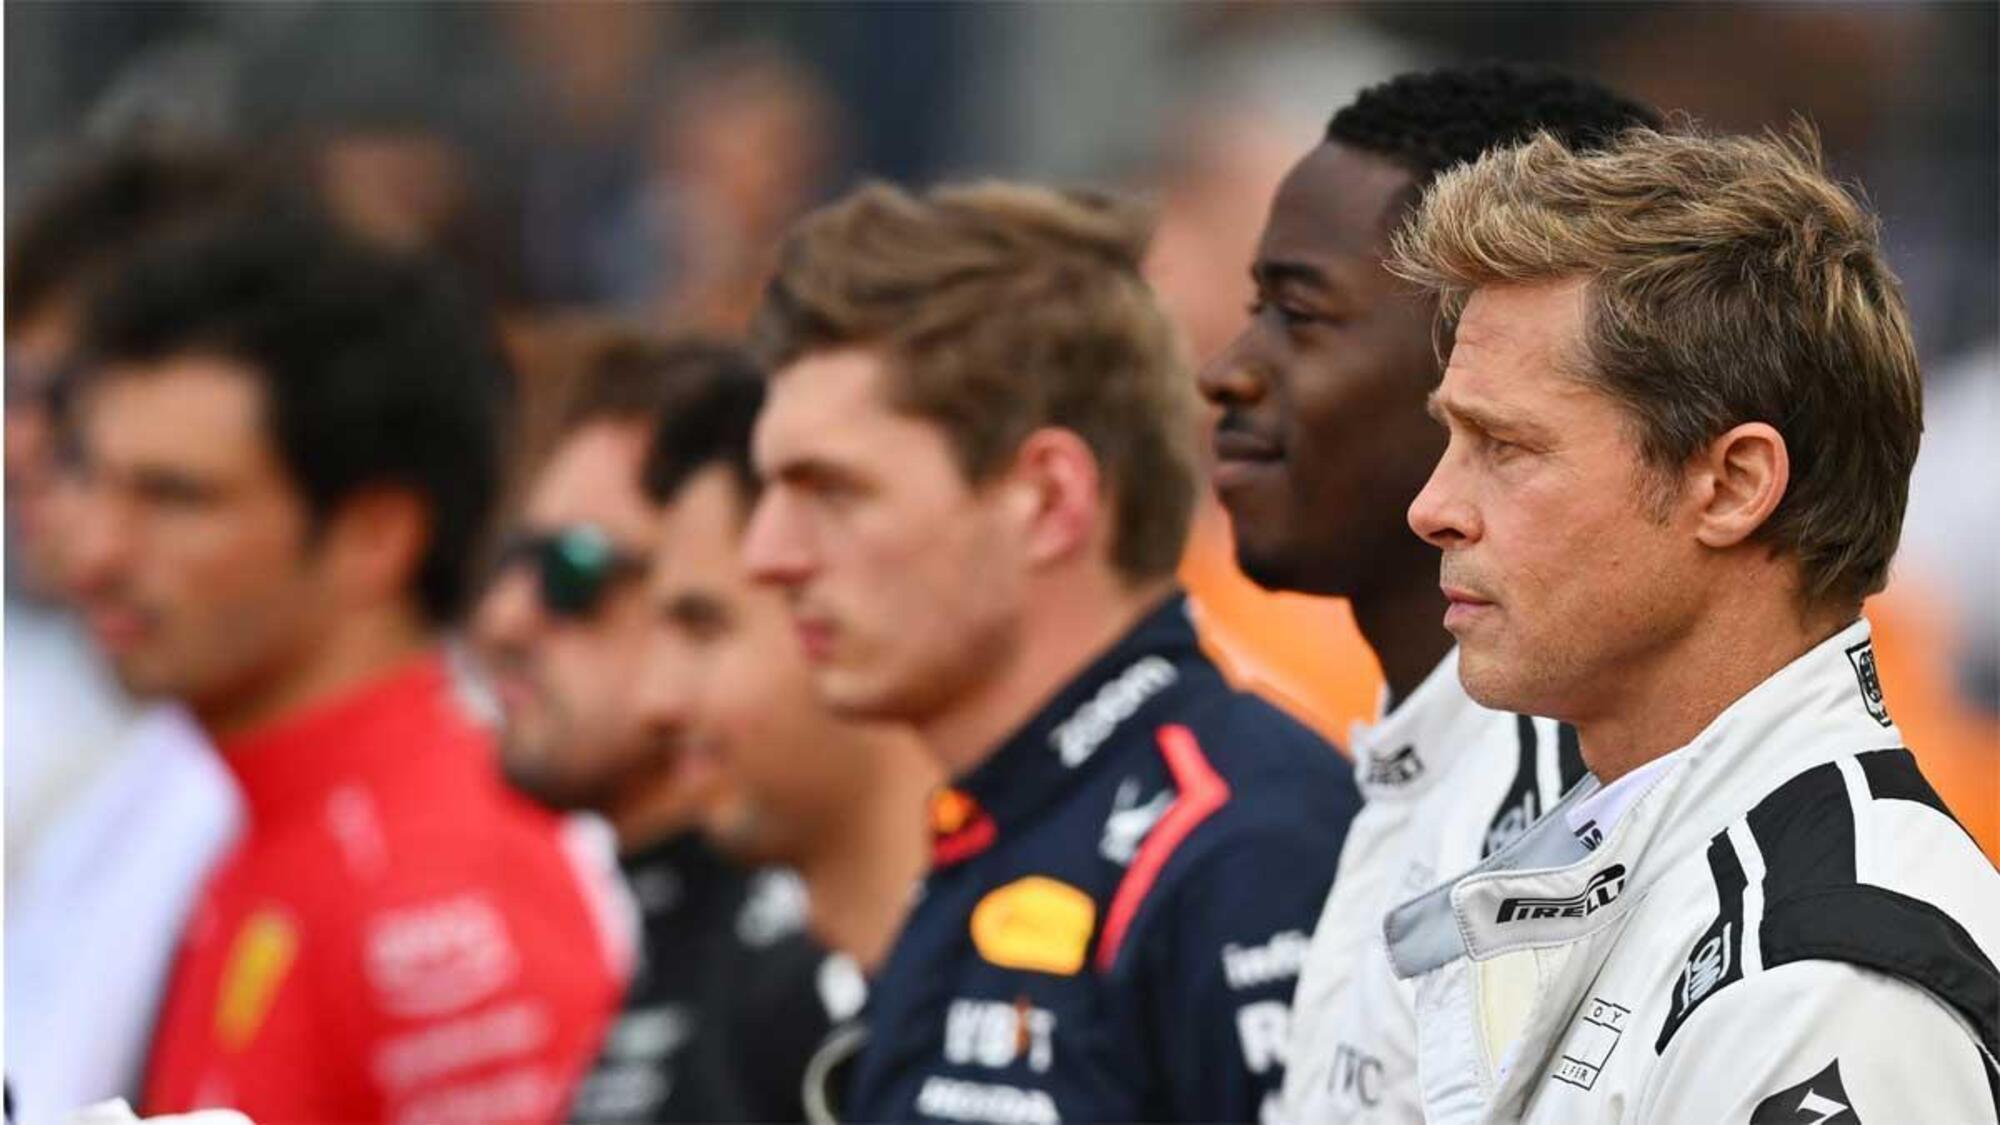 Brad Pitt insieme agli altri piloti di Formula 1